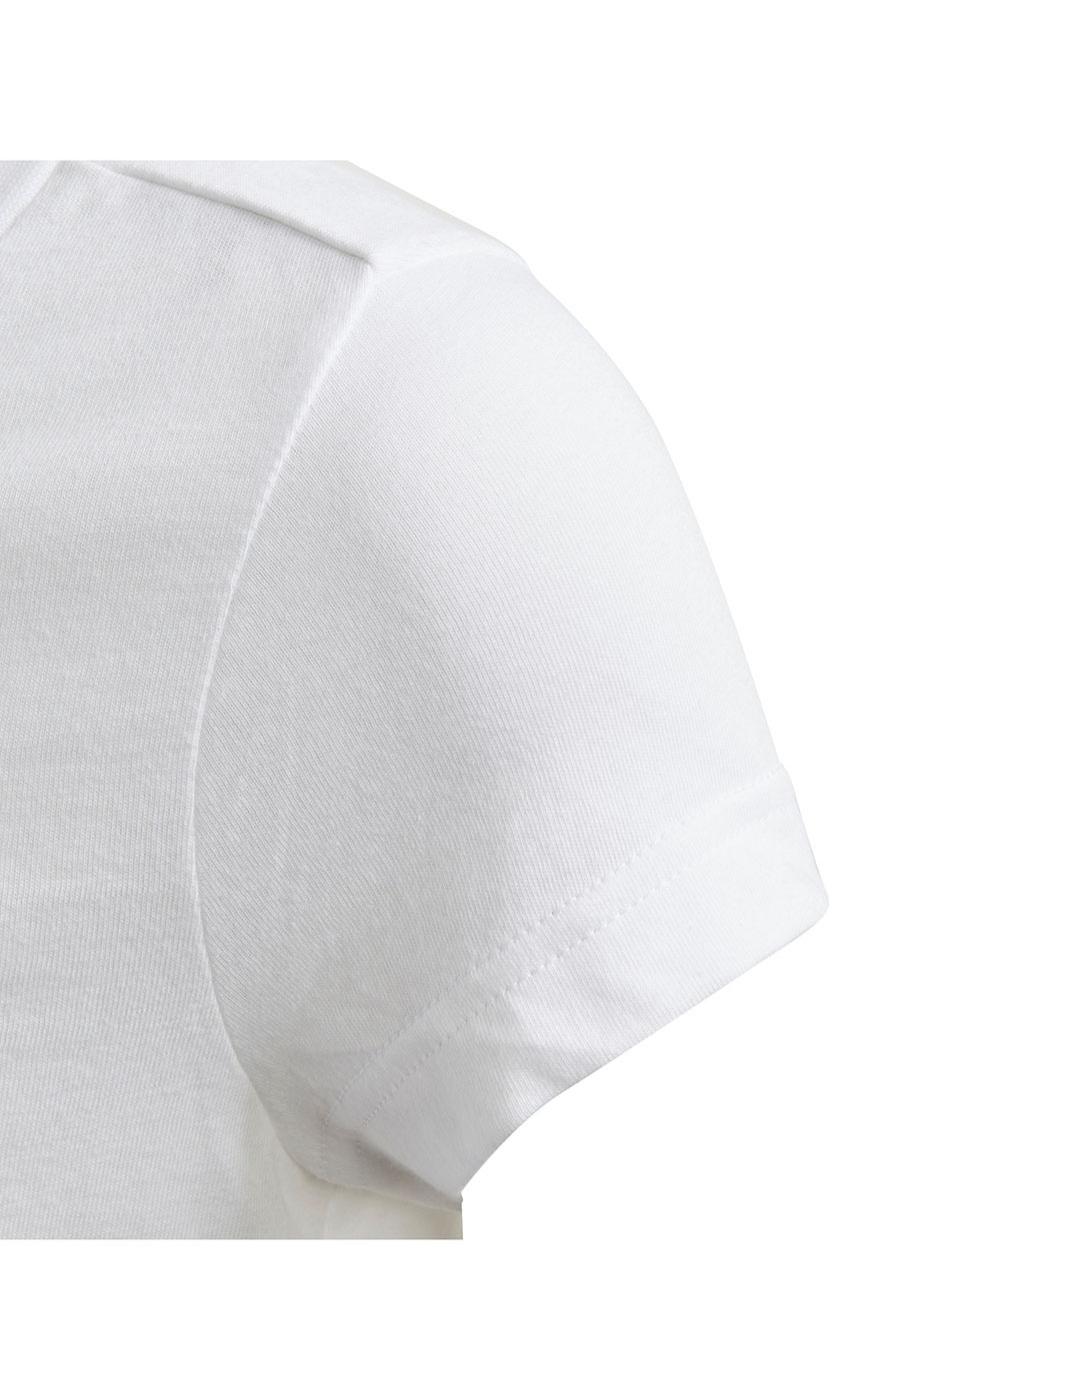 Camiseta Niña adidas Ox Blanca